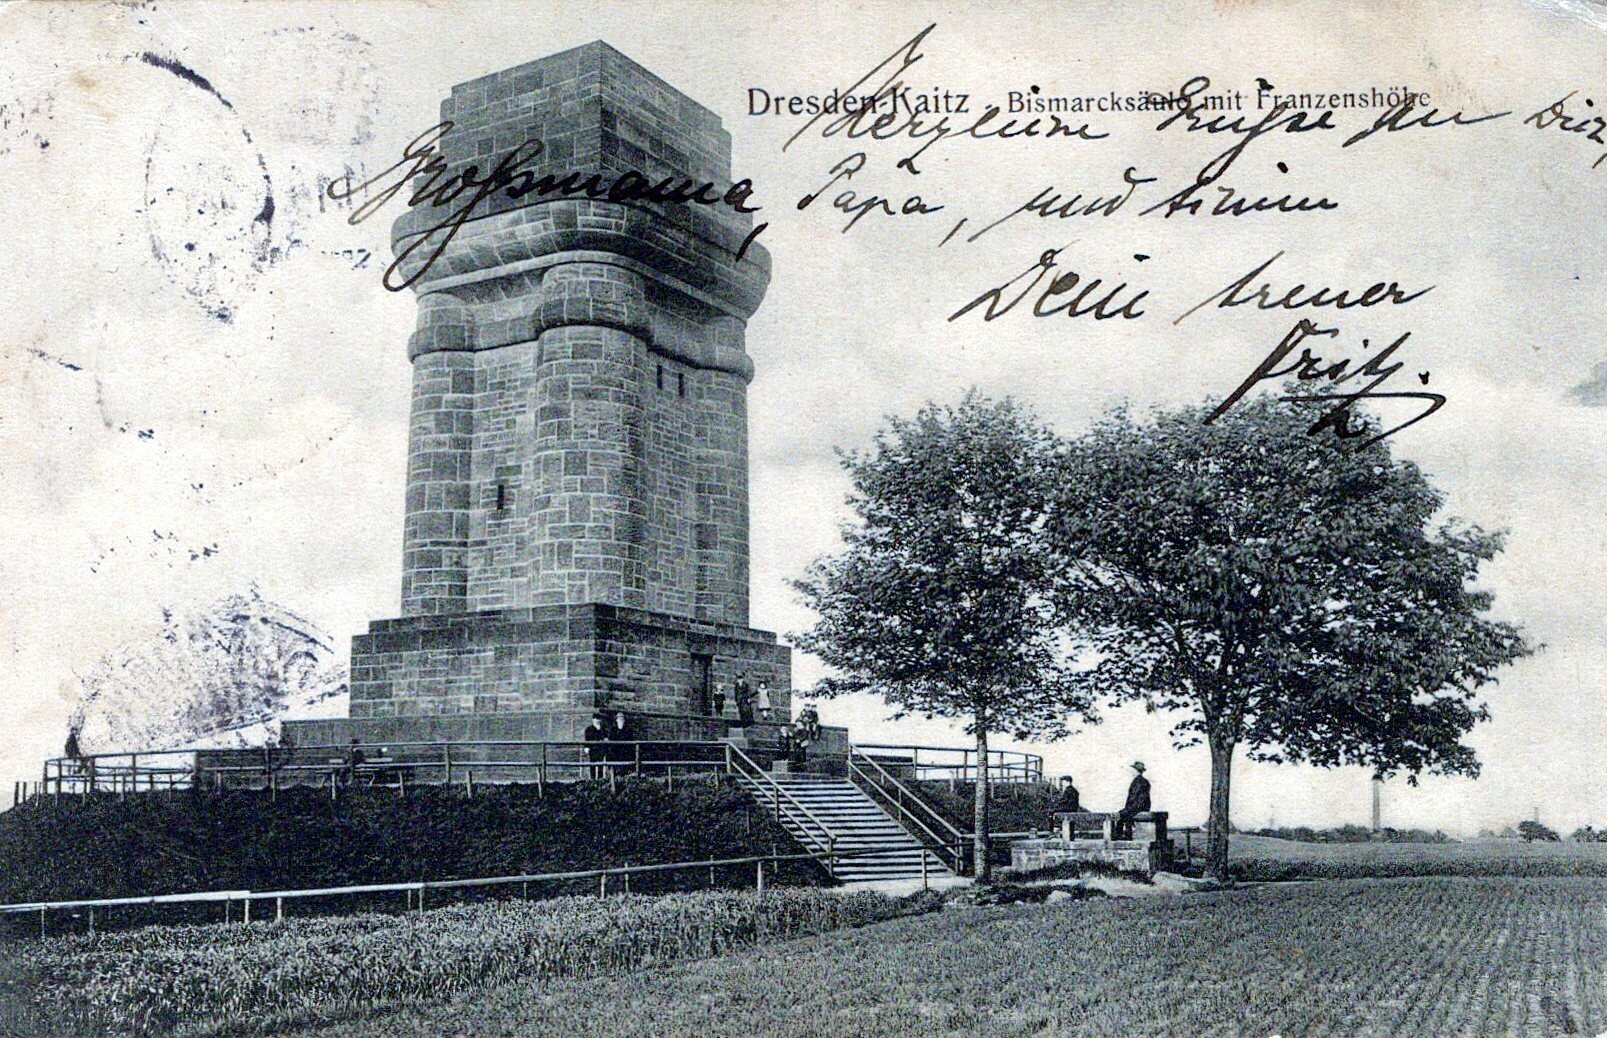 Postkarte: Dresden Kaitz Bismarcksäule (Haus Schminke RR-F)